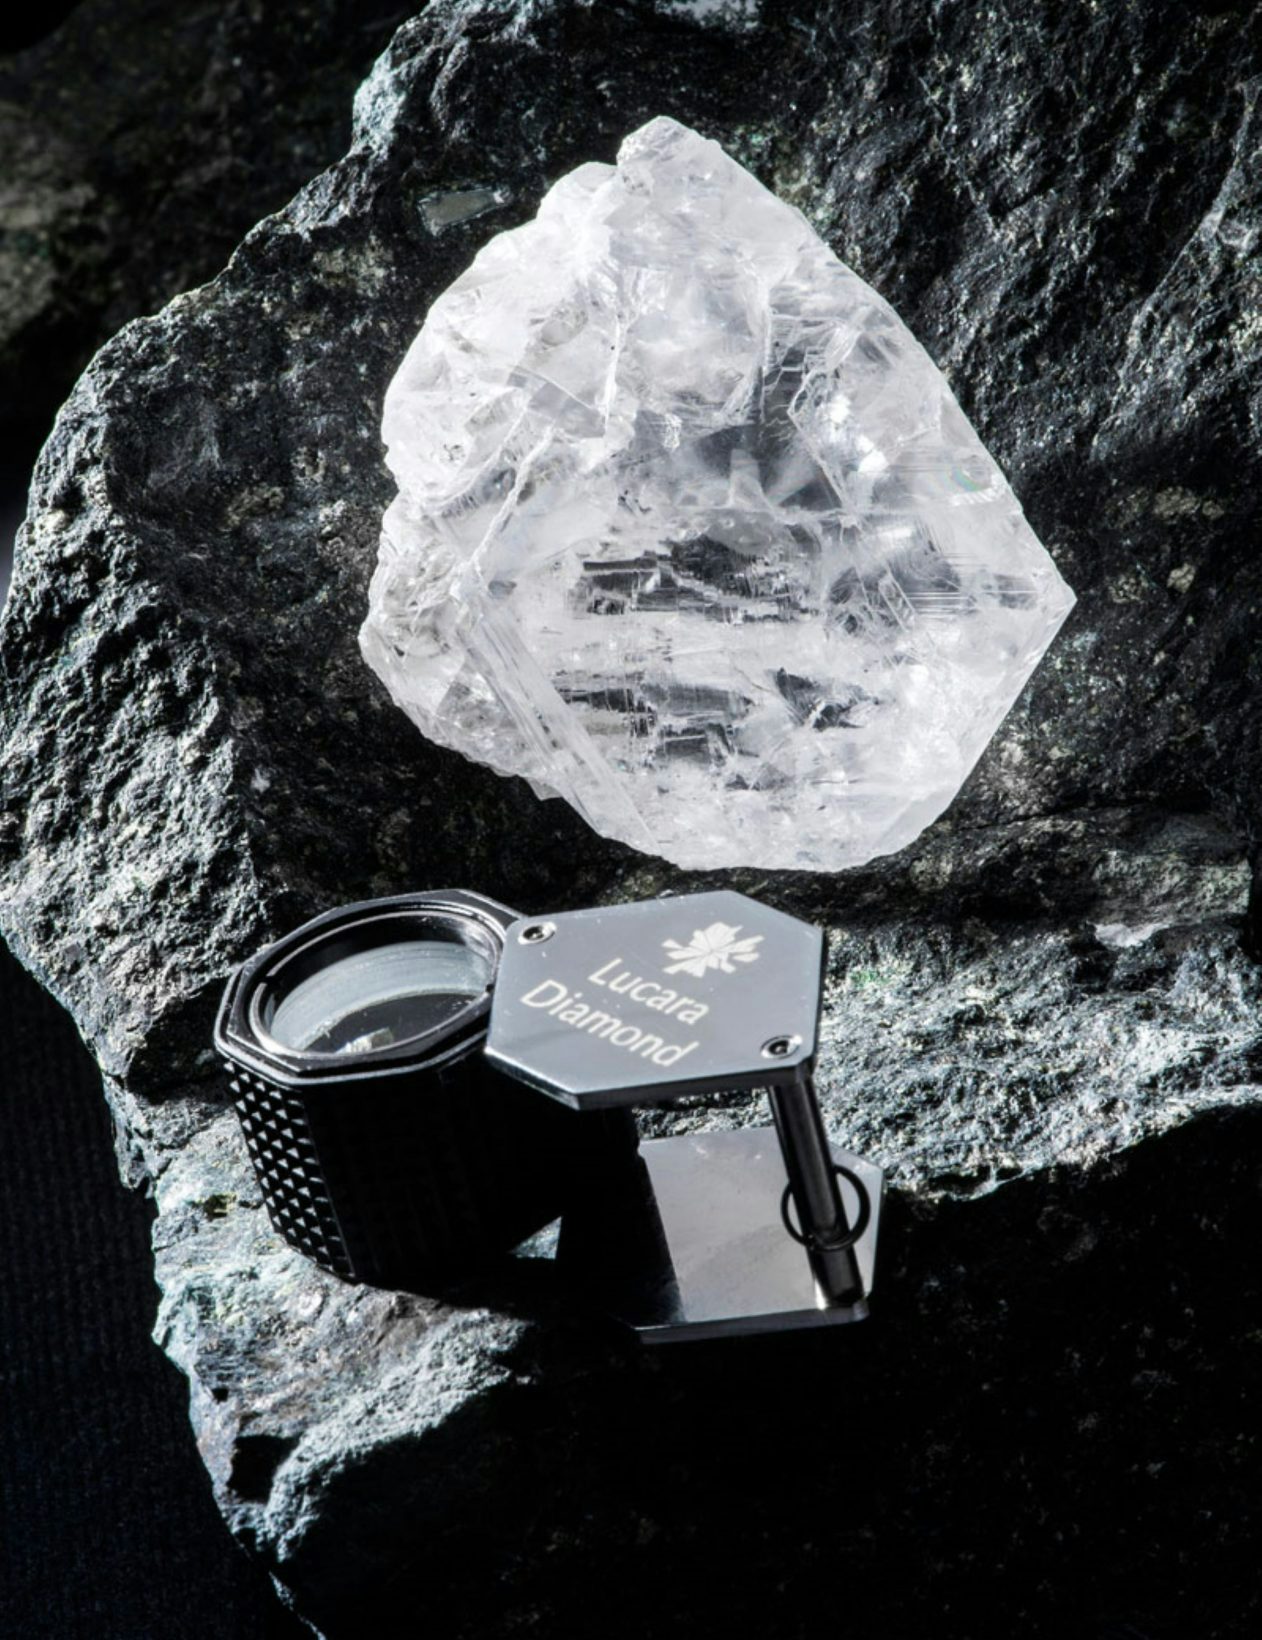 Botswana mined an exceptional 1080-carat diamond